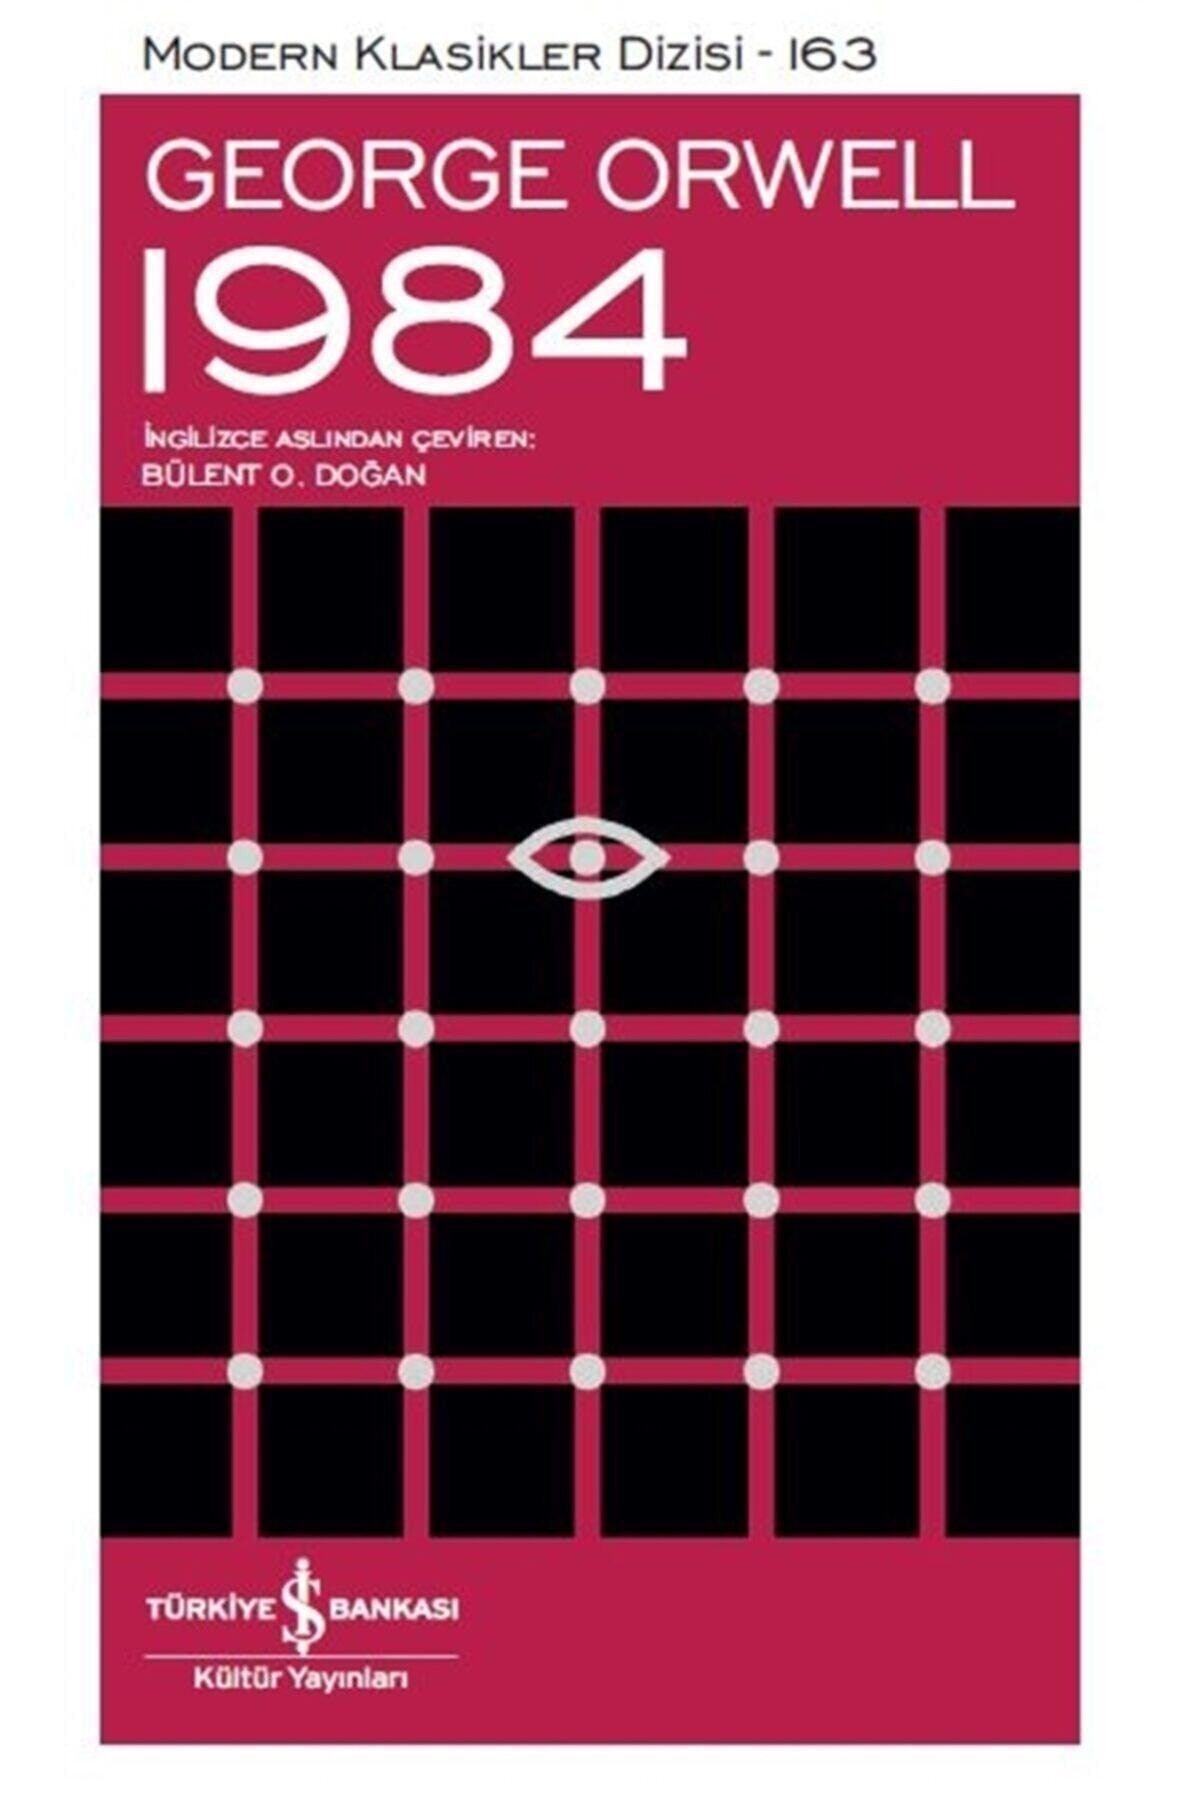 1984 - George Orwell 9786254052033 - Swordslife